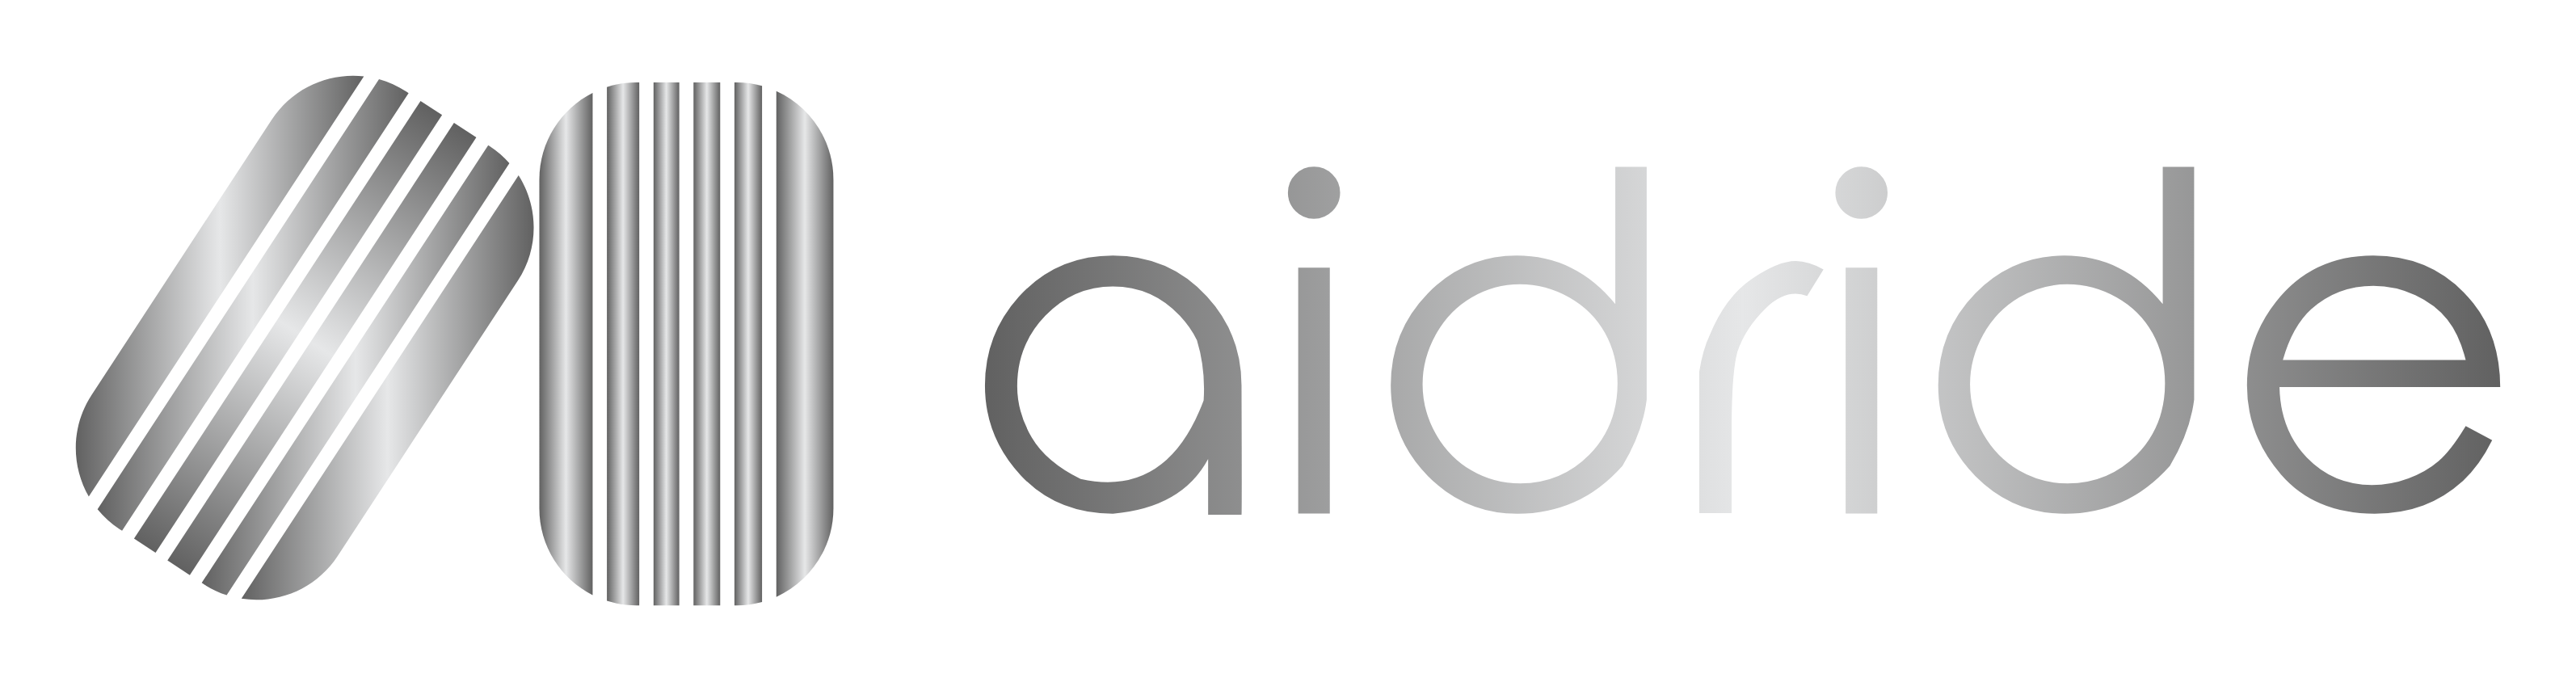 Aidride Silver Logo